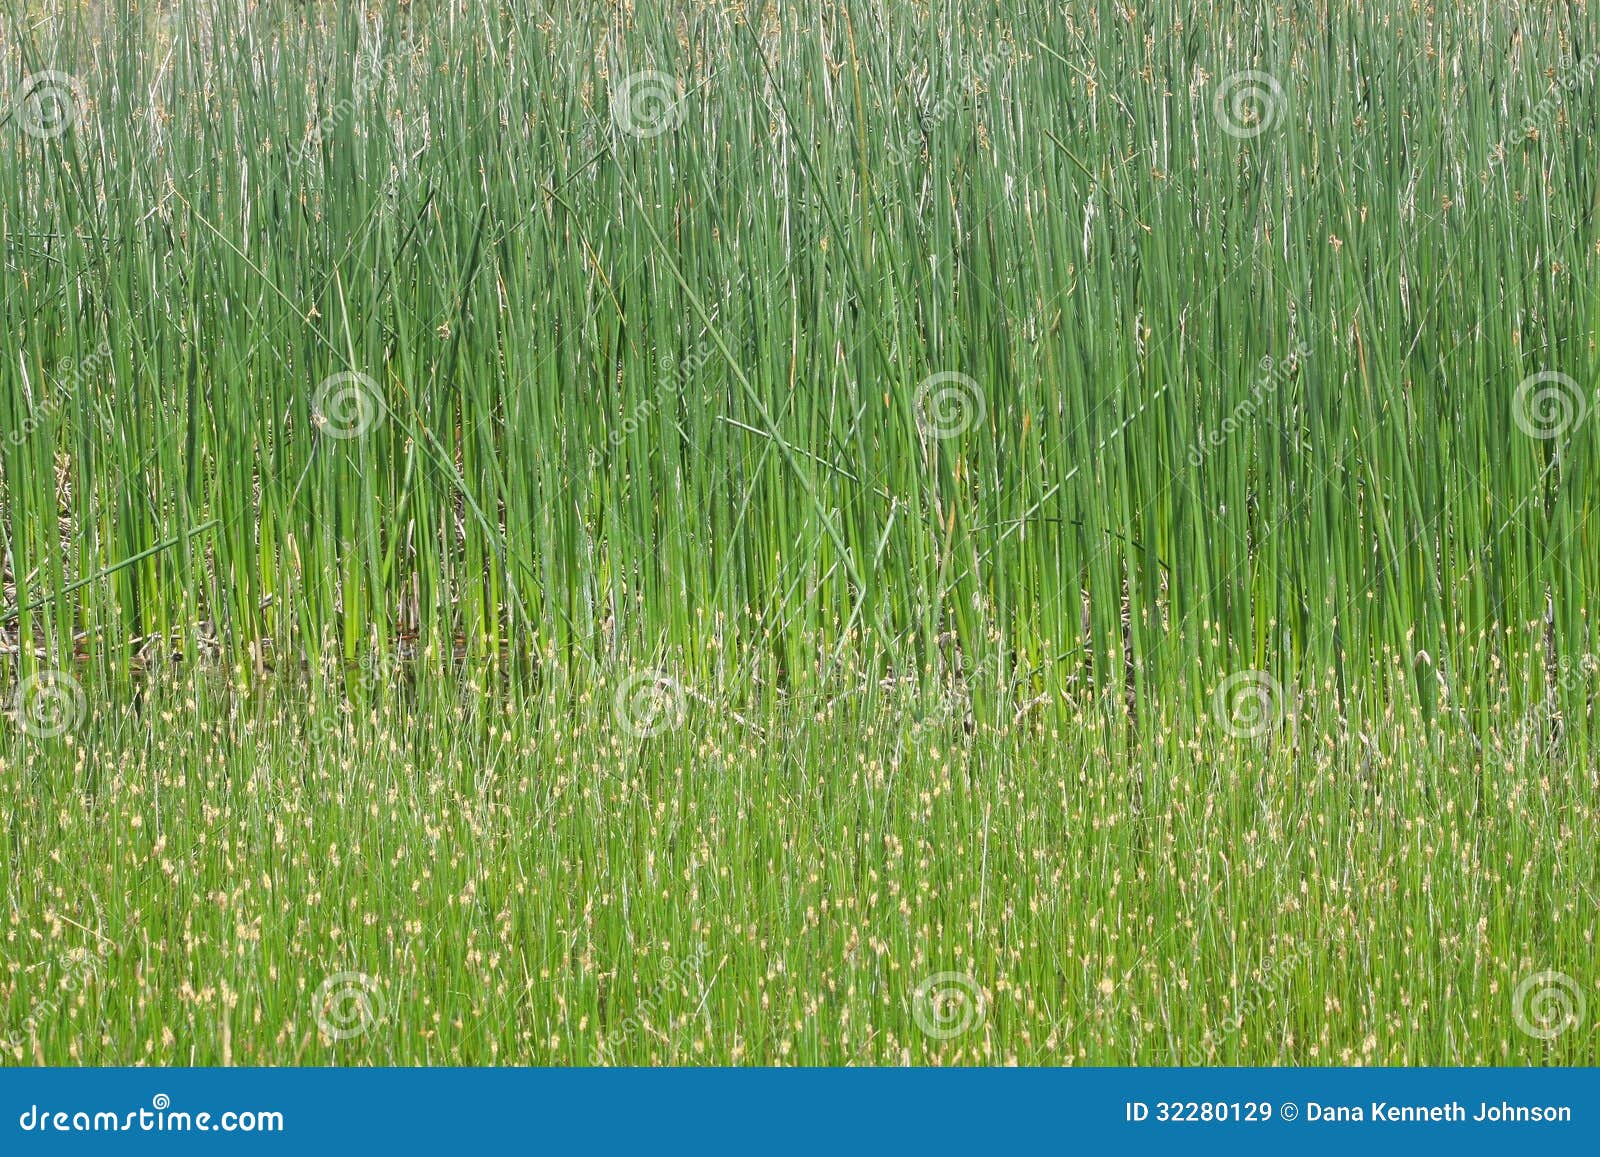 The Wild Reeds - Wikipedia